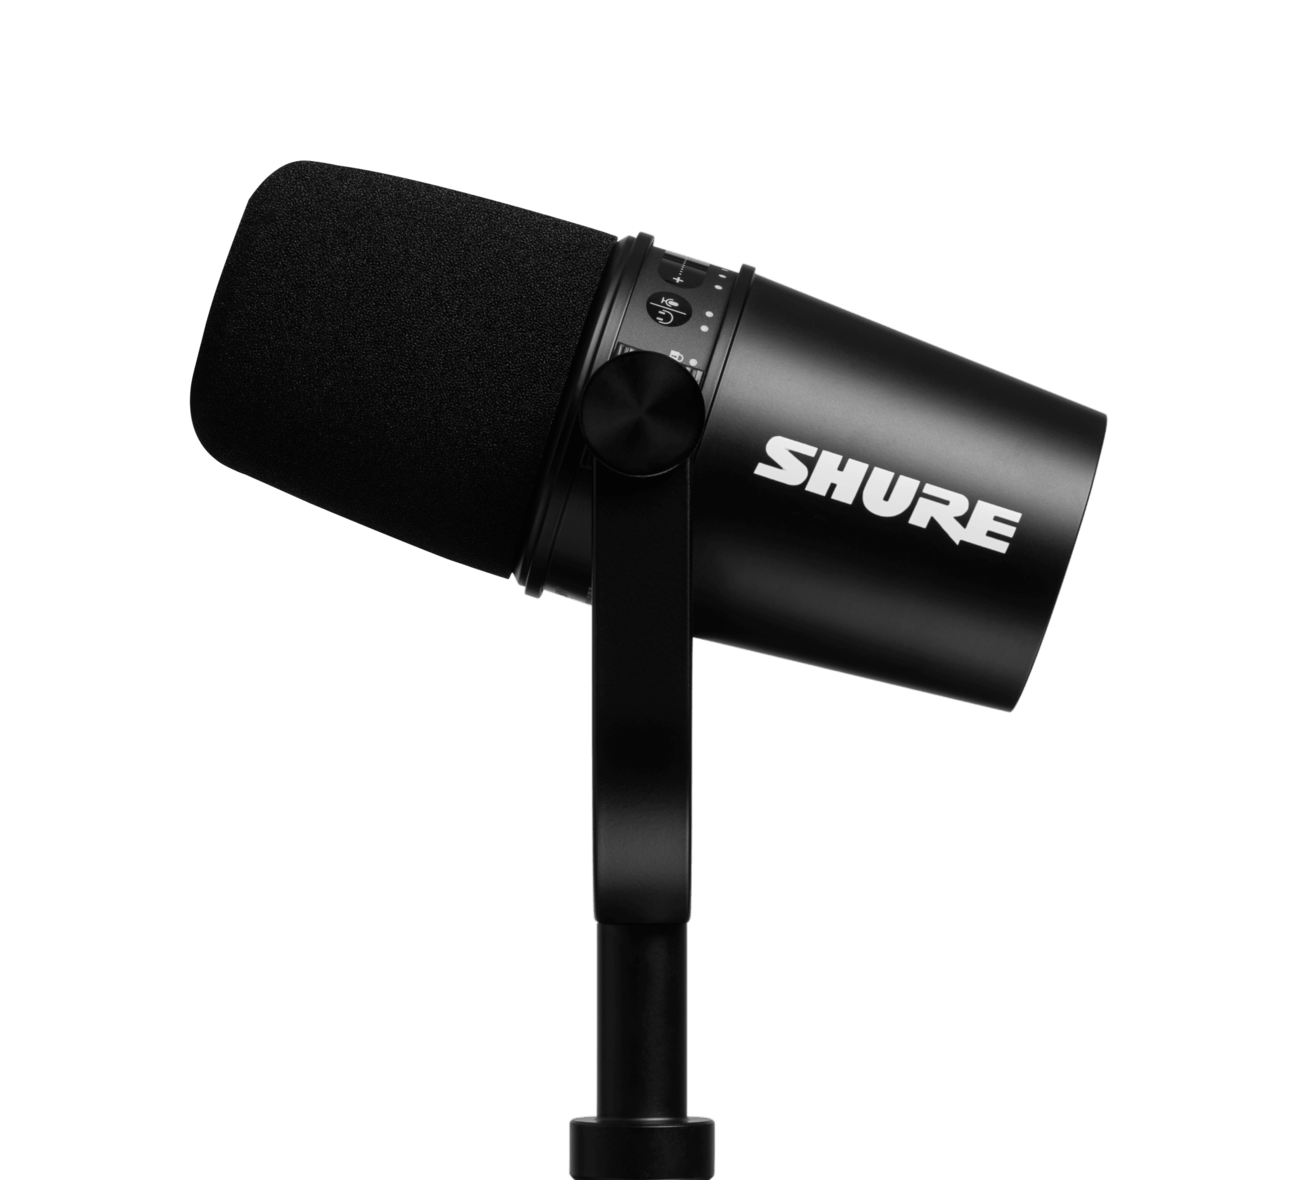 MV7 XLR/USB Podcast Microphone, Black